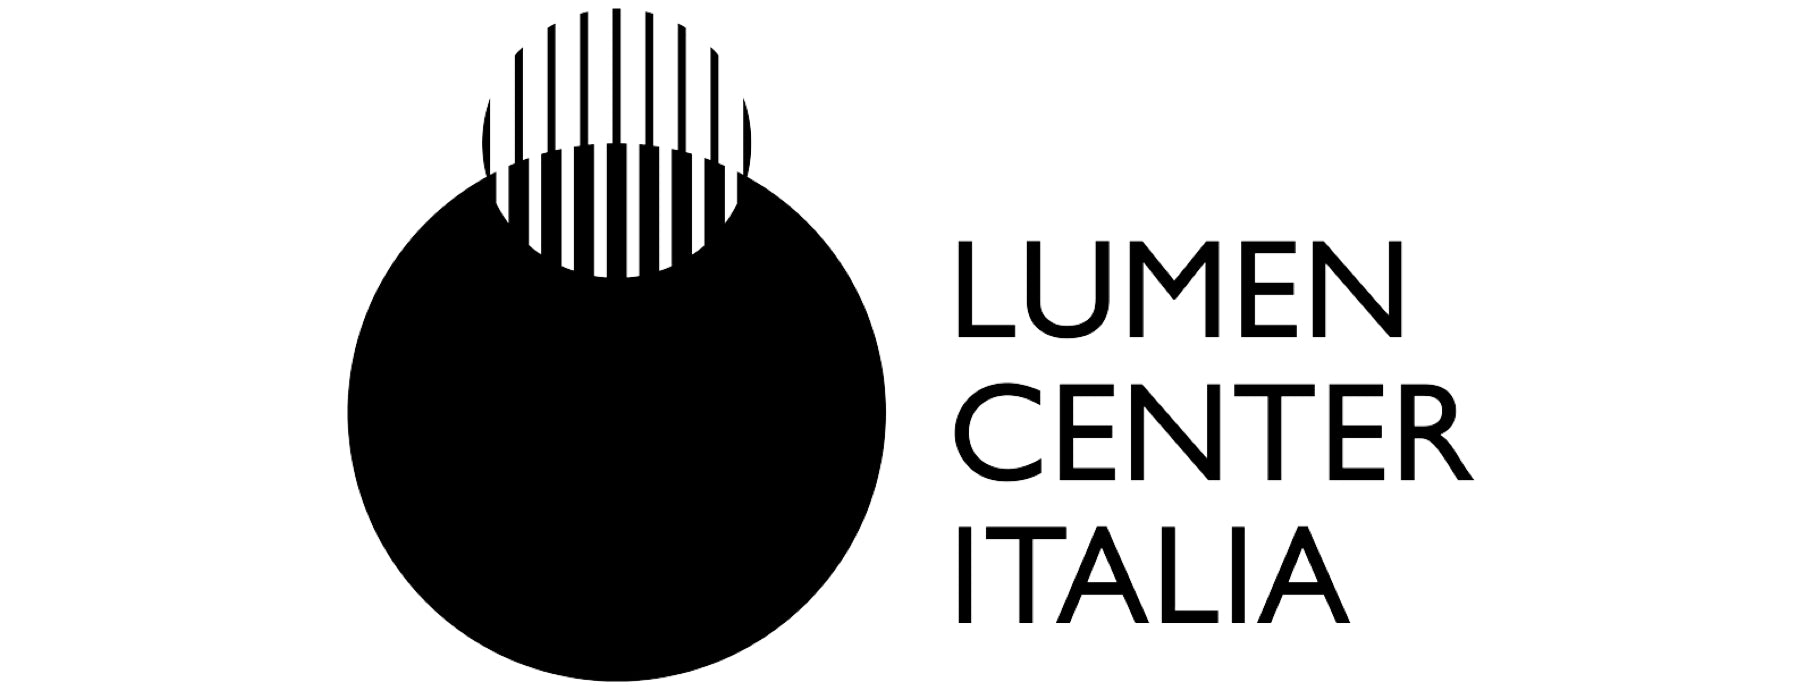 Lumen Center Italia Lighting Collection